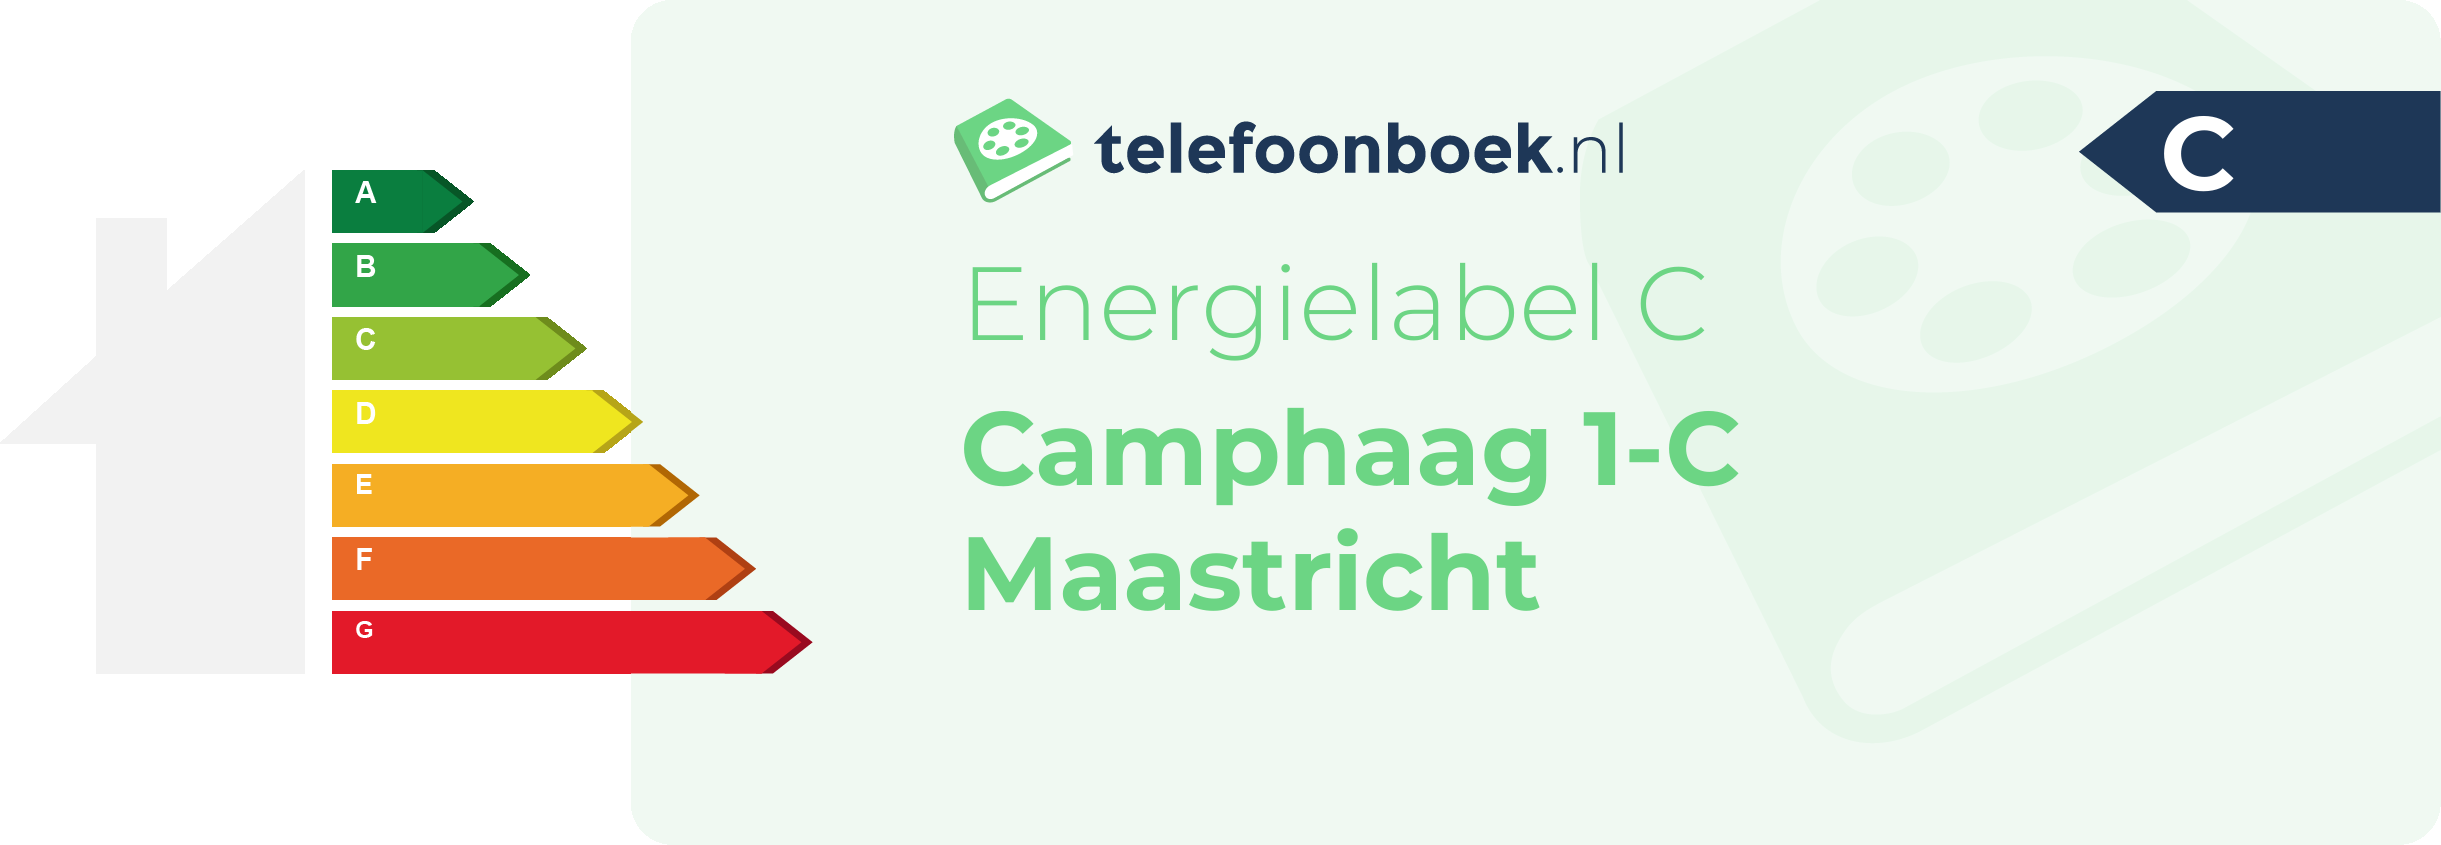 Energielabel Camphaag 1-C Maastricht